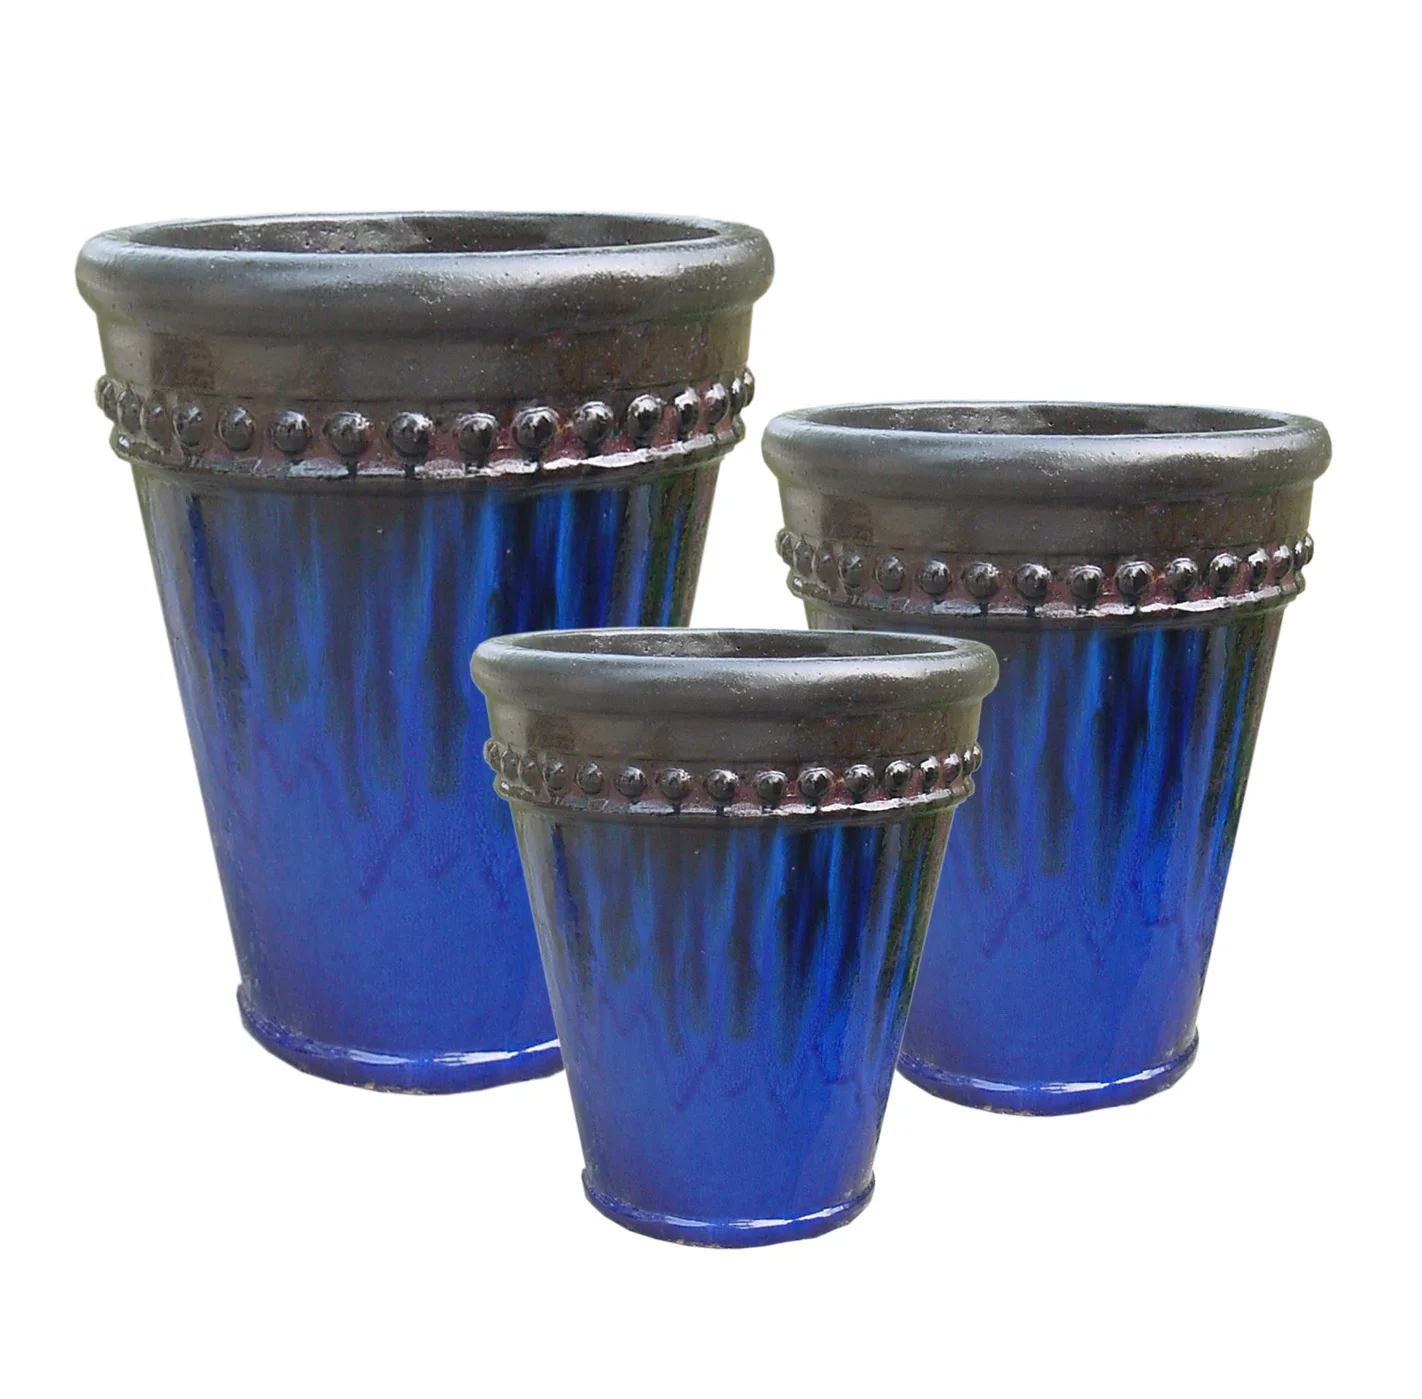 Wholesale Ceramic Flower Pots Outdoor Glazed Pottery Design for Home & Nursery Floor Planting Garden Planter Kit for Room Use